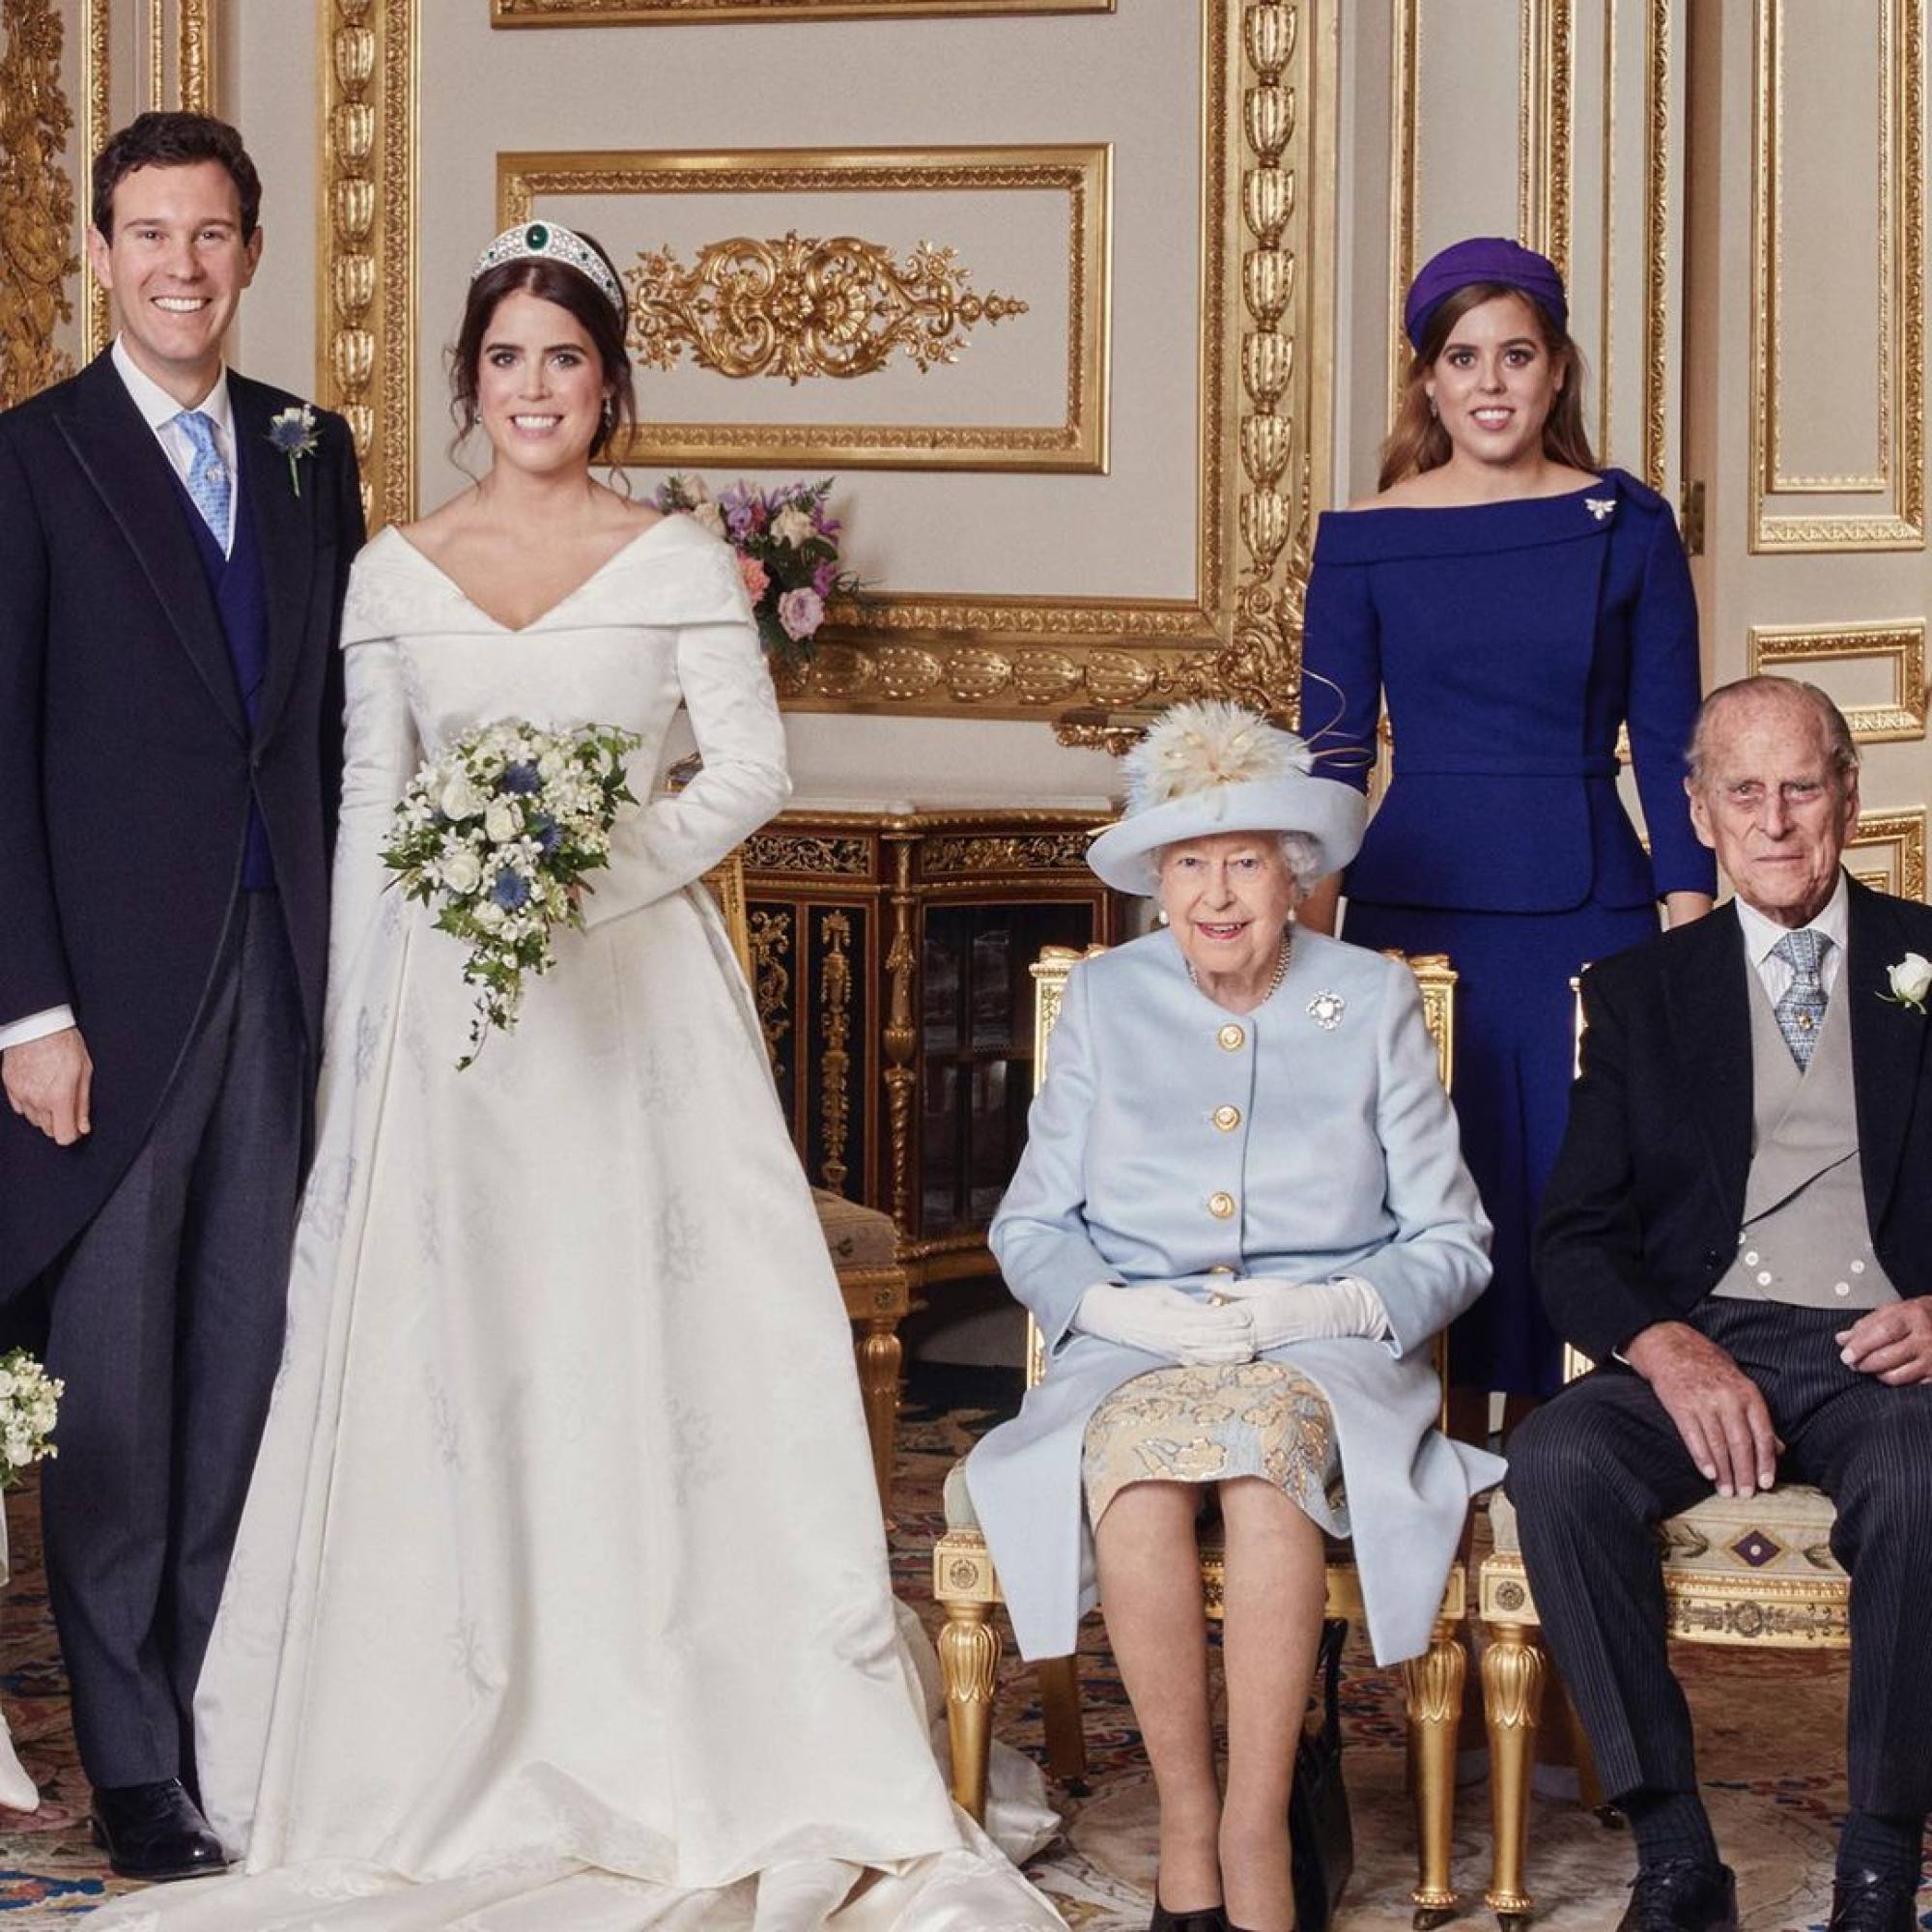 Royal Family Around the World: Princess Eugenie and Princess